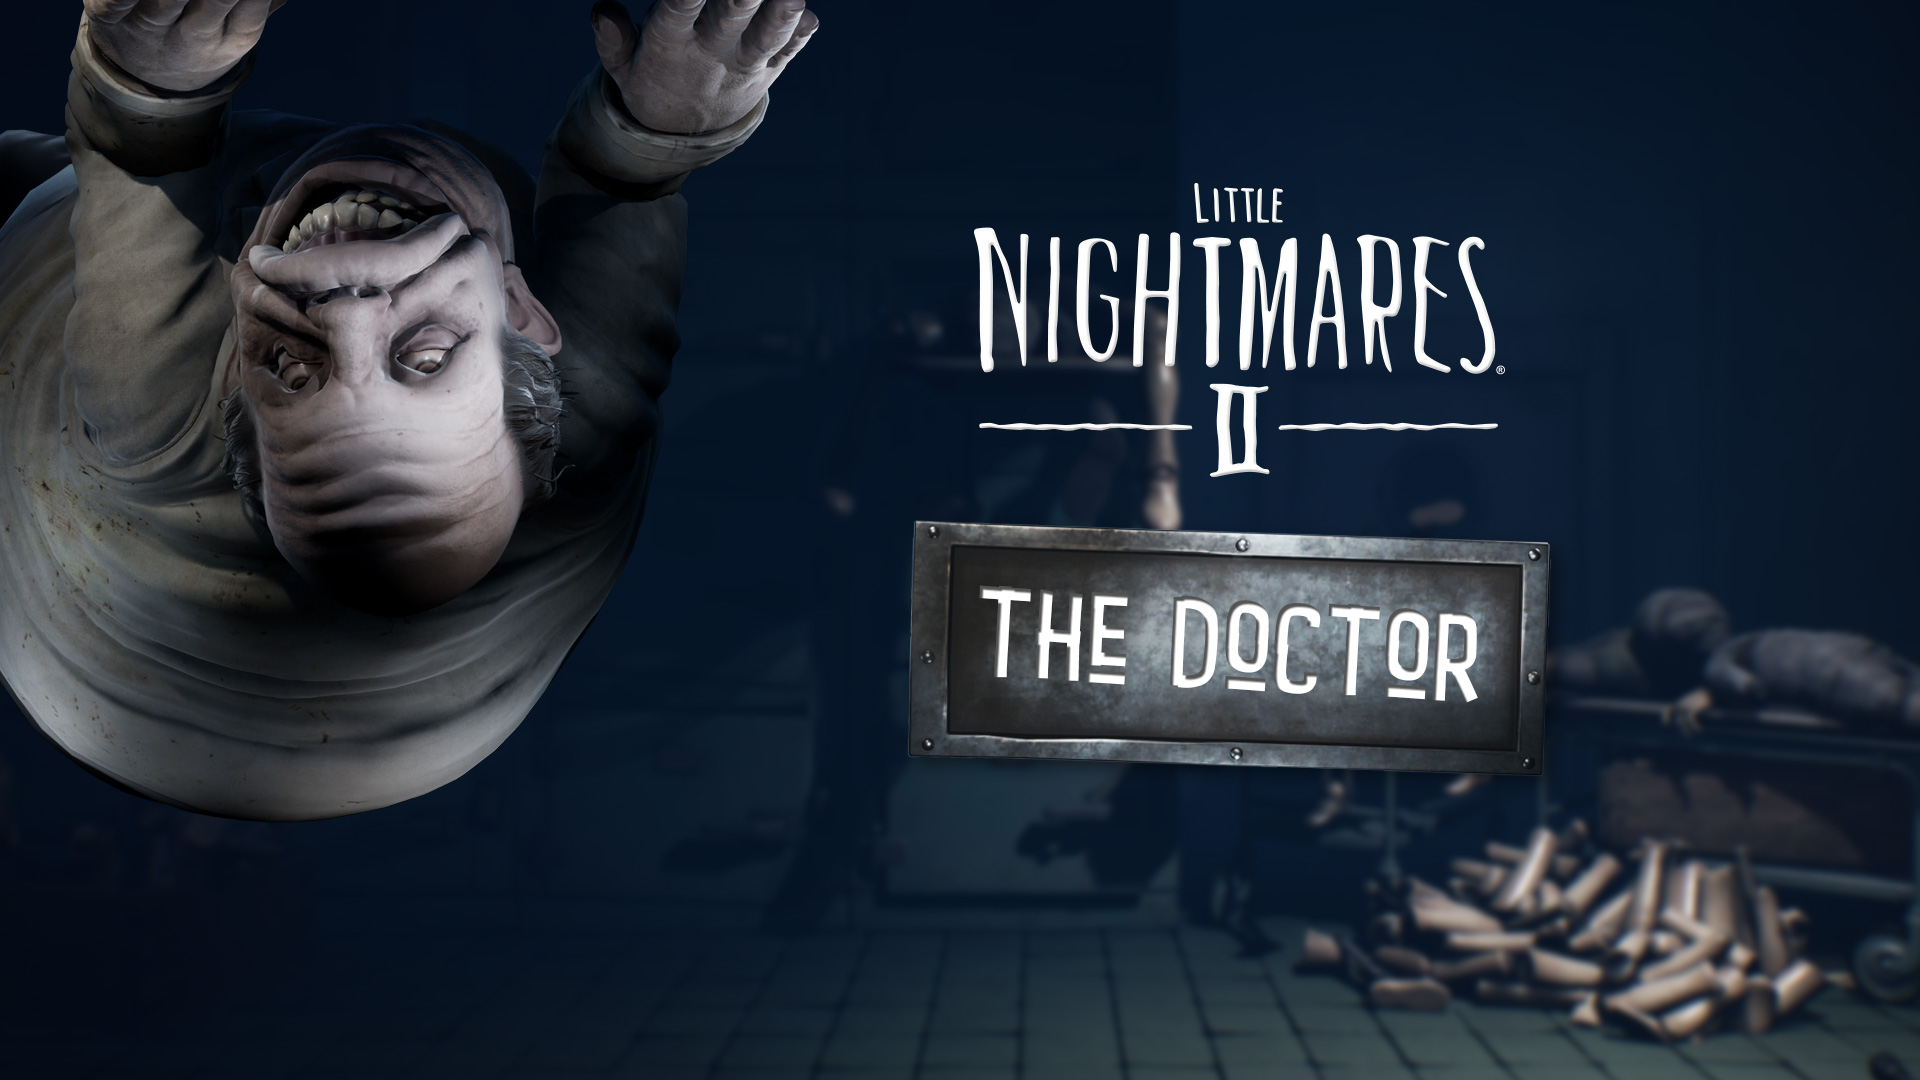 the doctor little nightmares 2